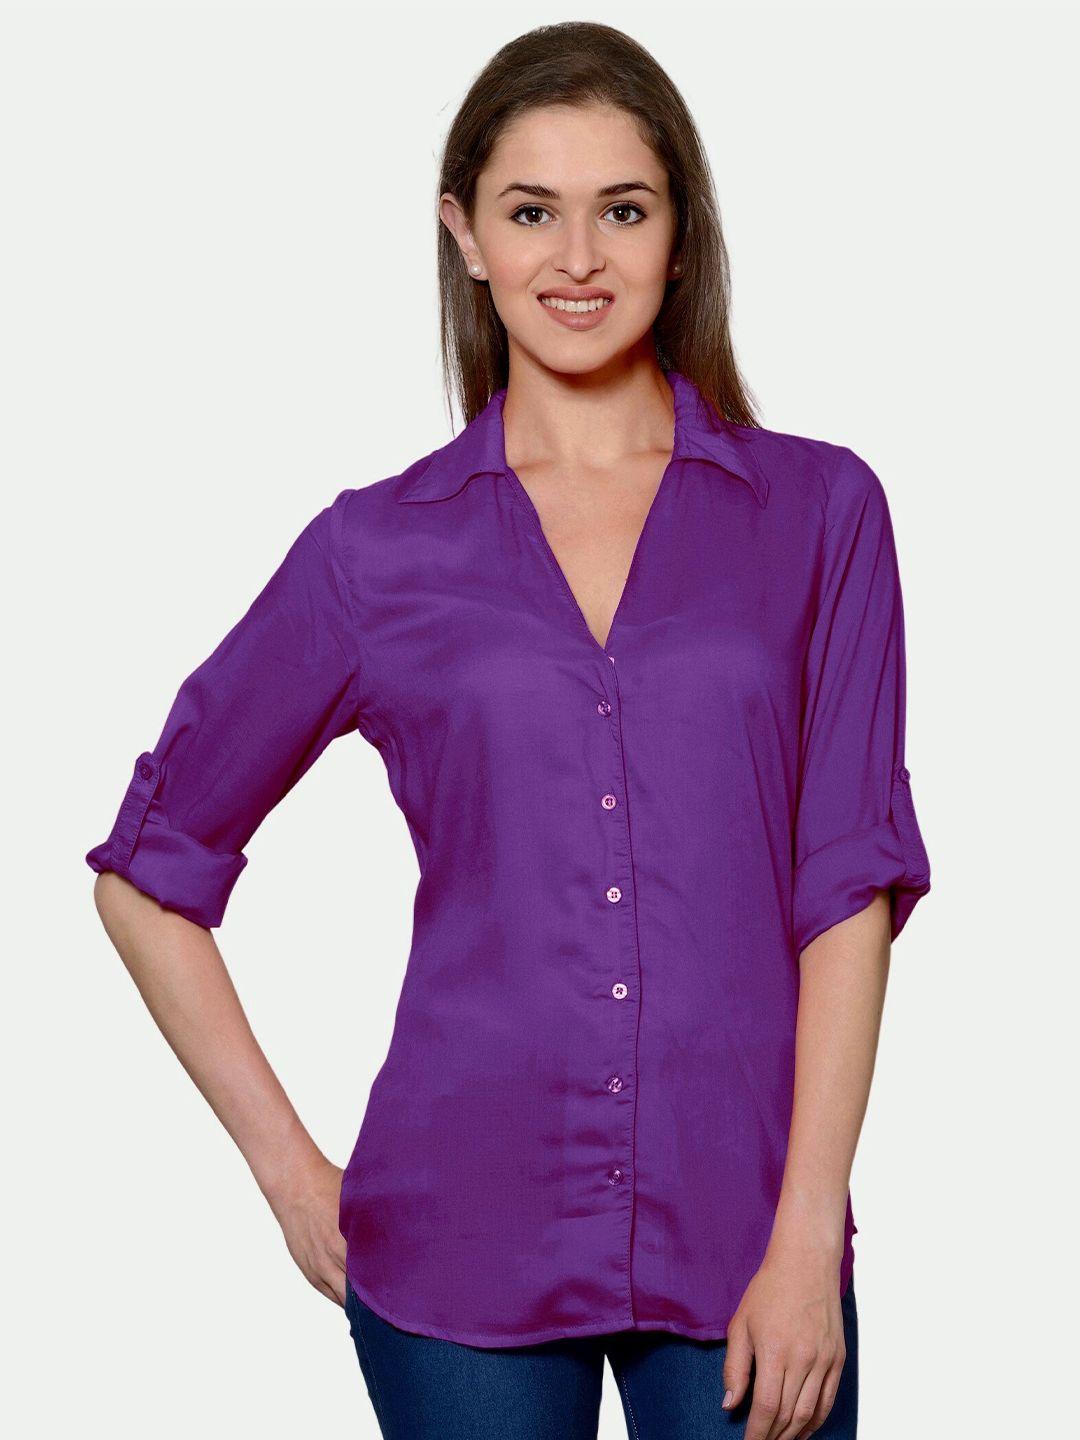 patrorna women purple comfort casual antimicrobial shirt